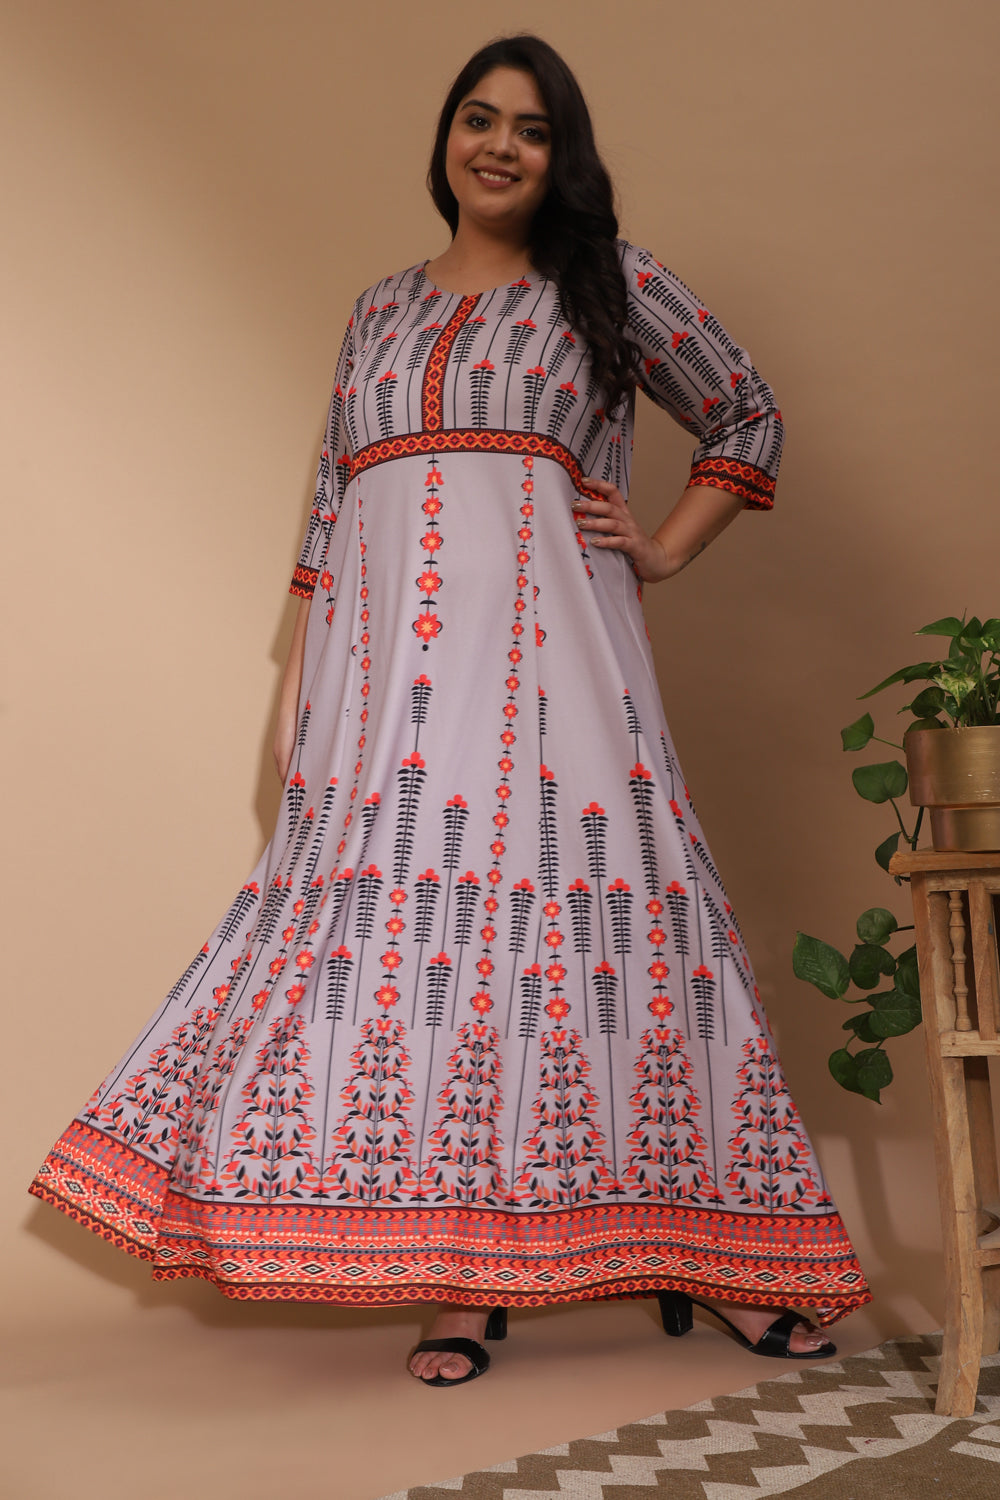 Gery Advika Printed Dress